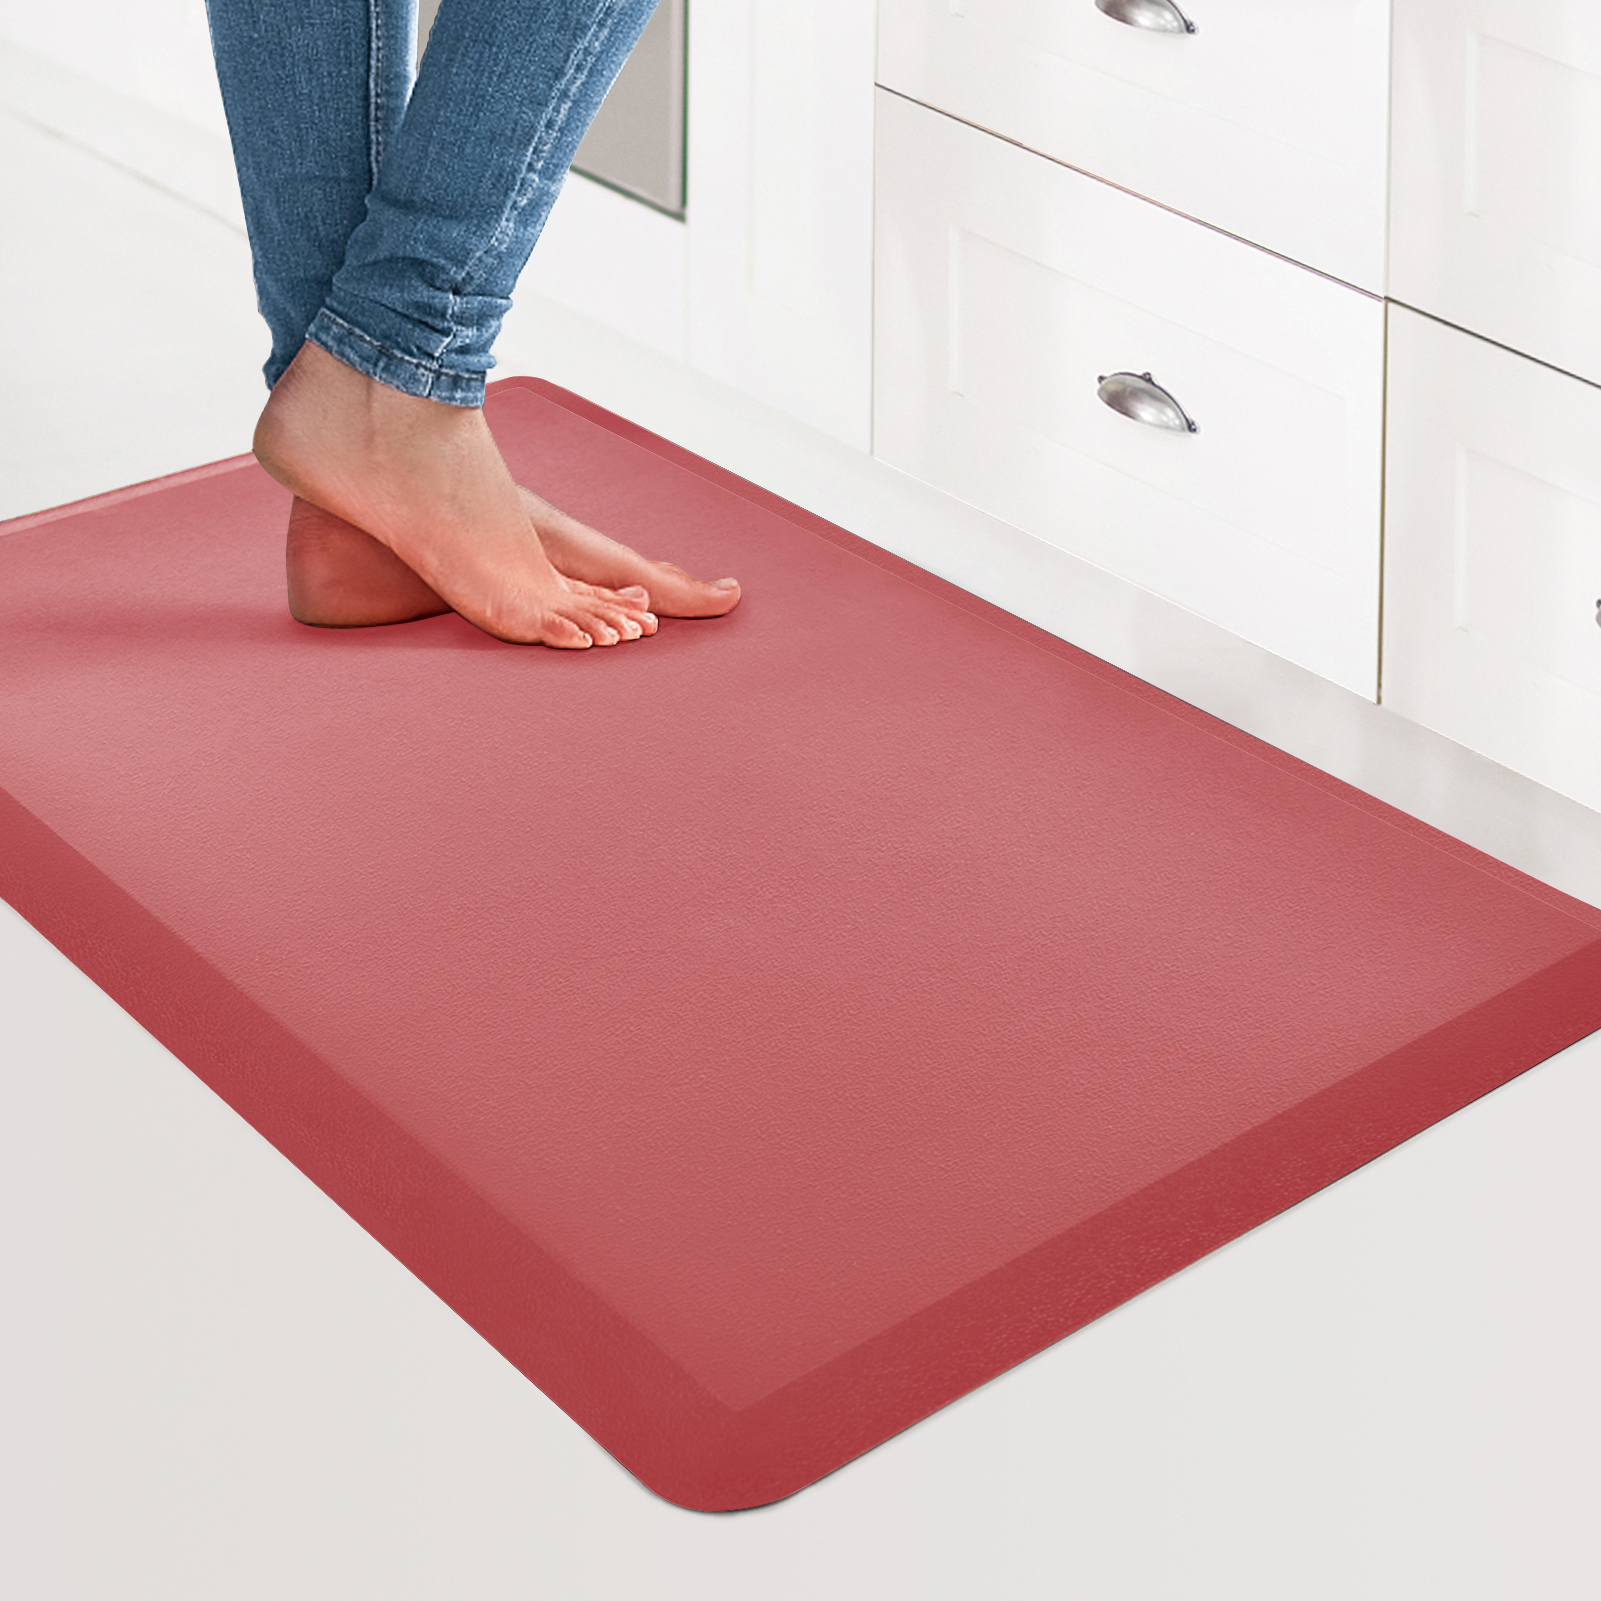 Y12001GY-Art3d Anti Fatigue Mat - 1/2 Inch Cushioned Kitchen Mat - Non Slip  Foam Comfort Cushion for Standing Desk, Office or Garage Floor (17.3x28,  Grey)